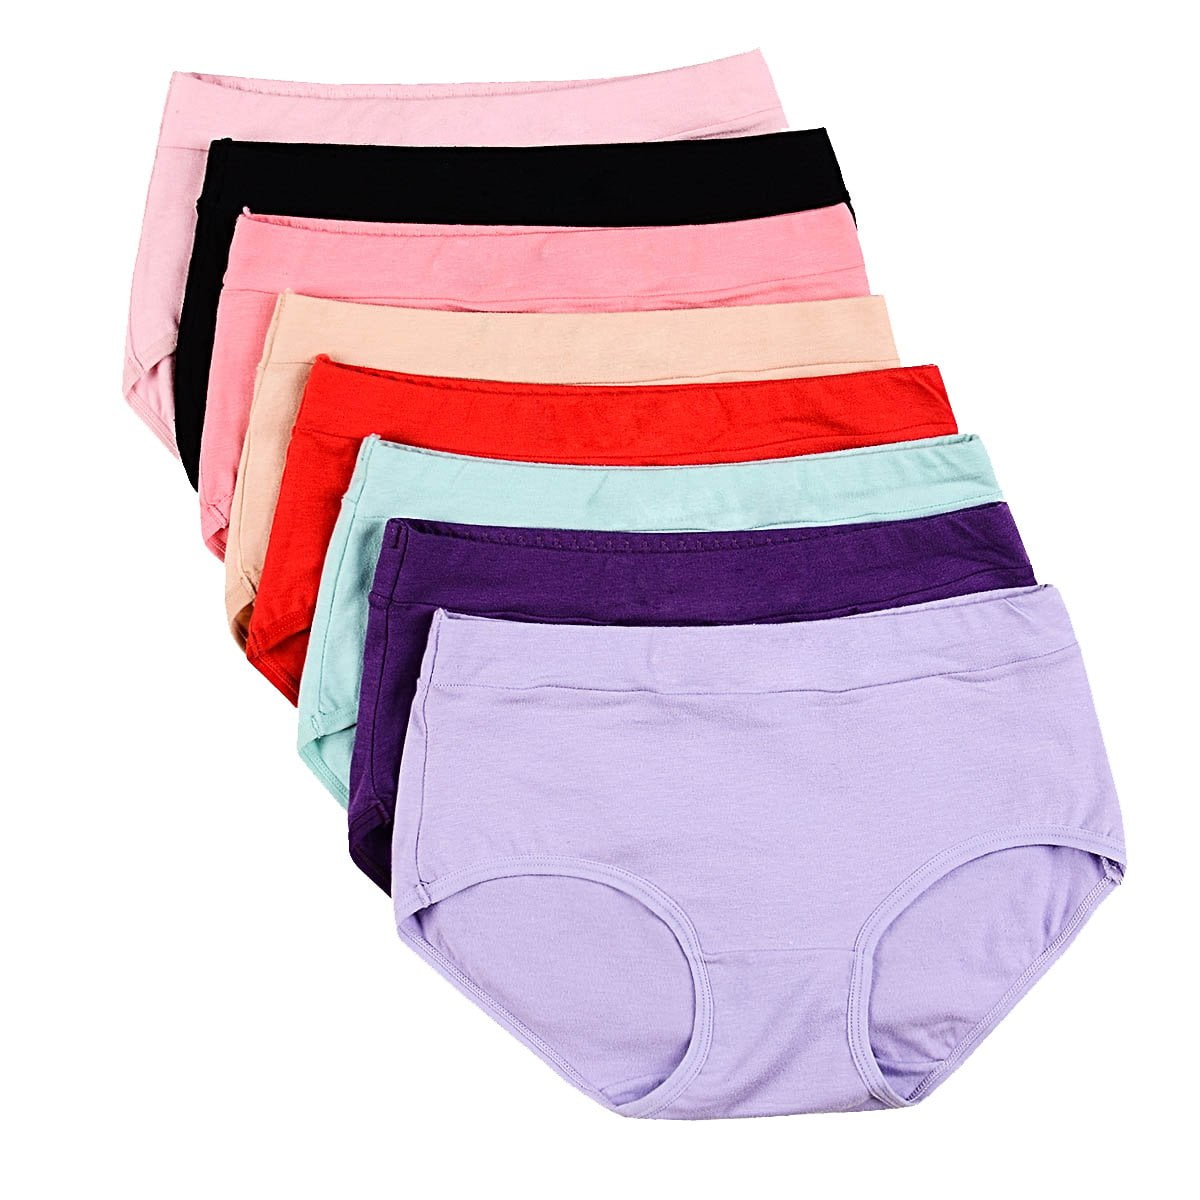 Buankoxy Women S Cotton Stretch Underwear Soft Mid Rise Briefs Underpants 8 Pack Size 5